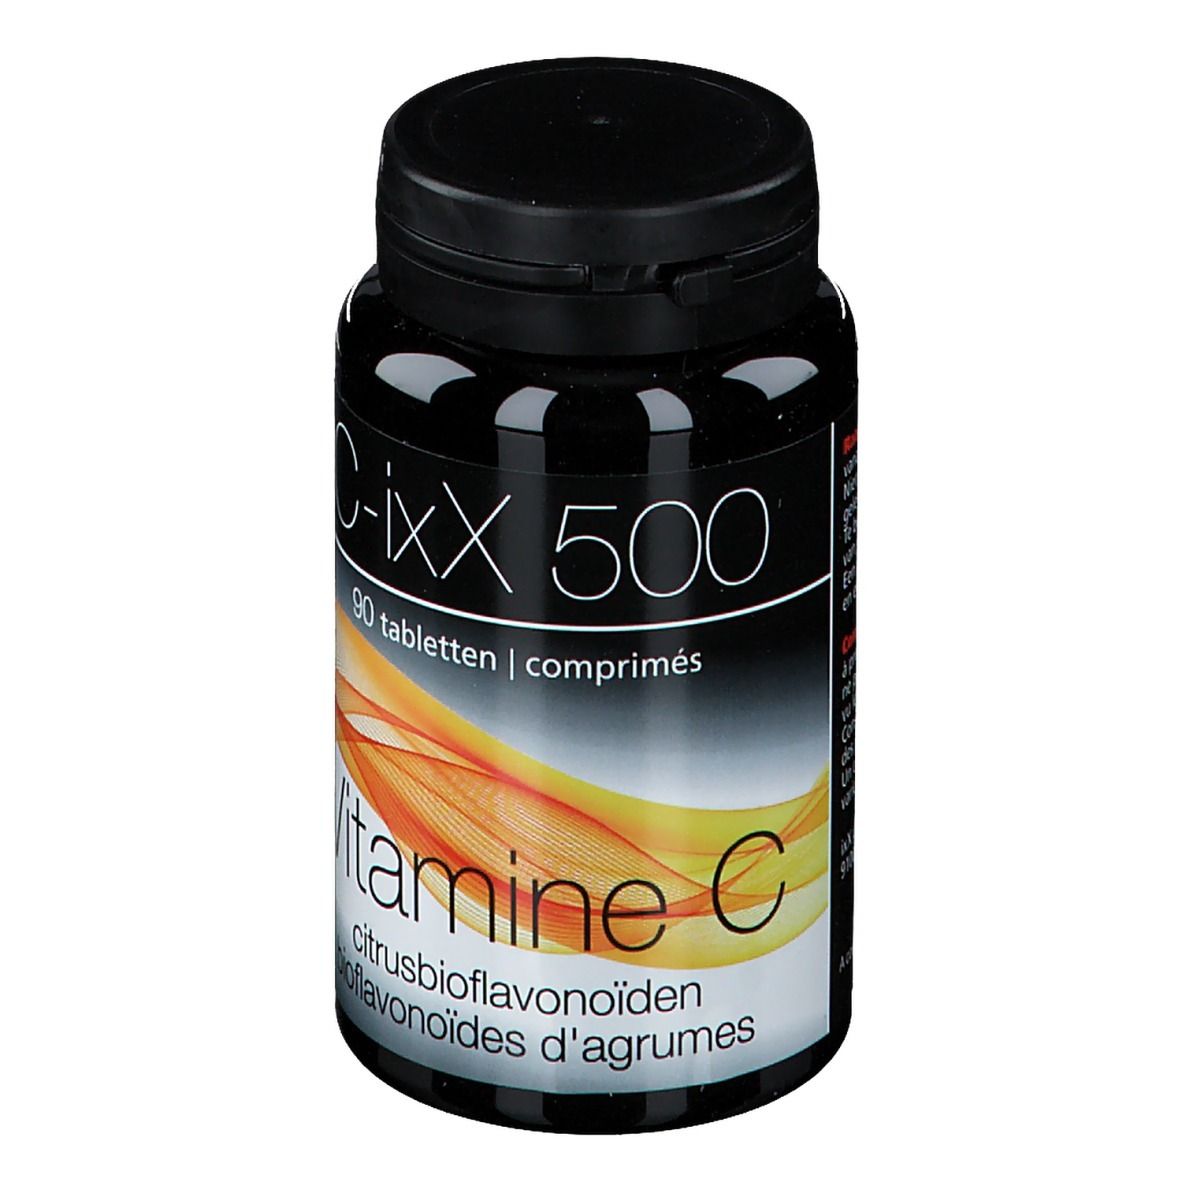 C-ixX 500 Vitamine C